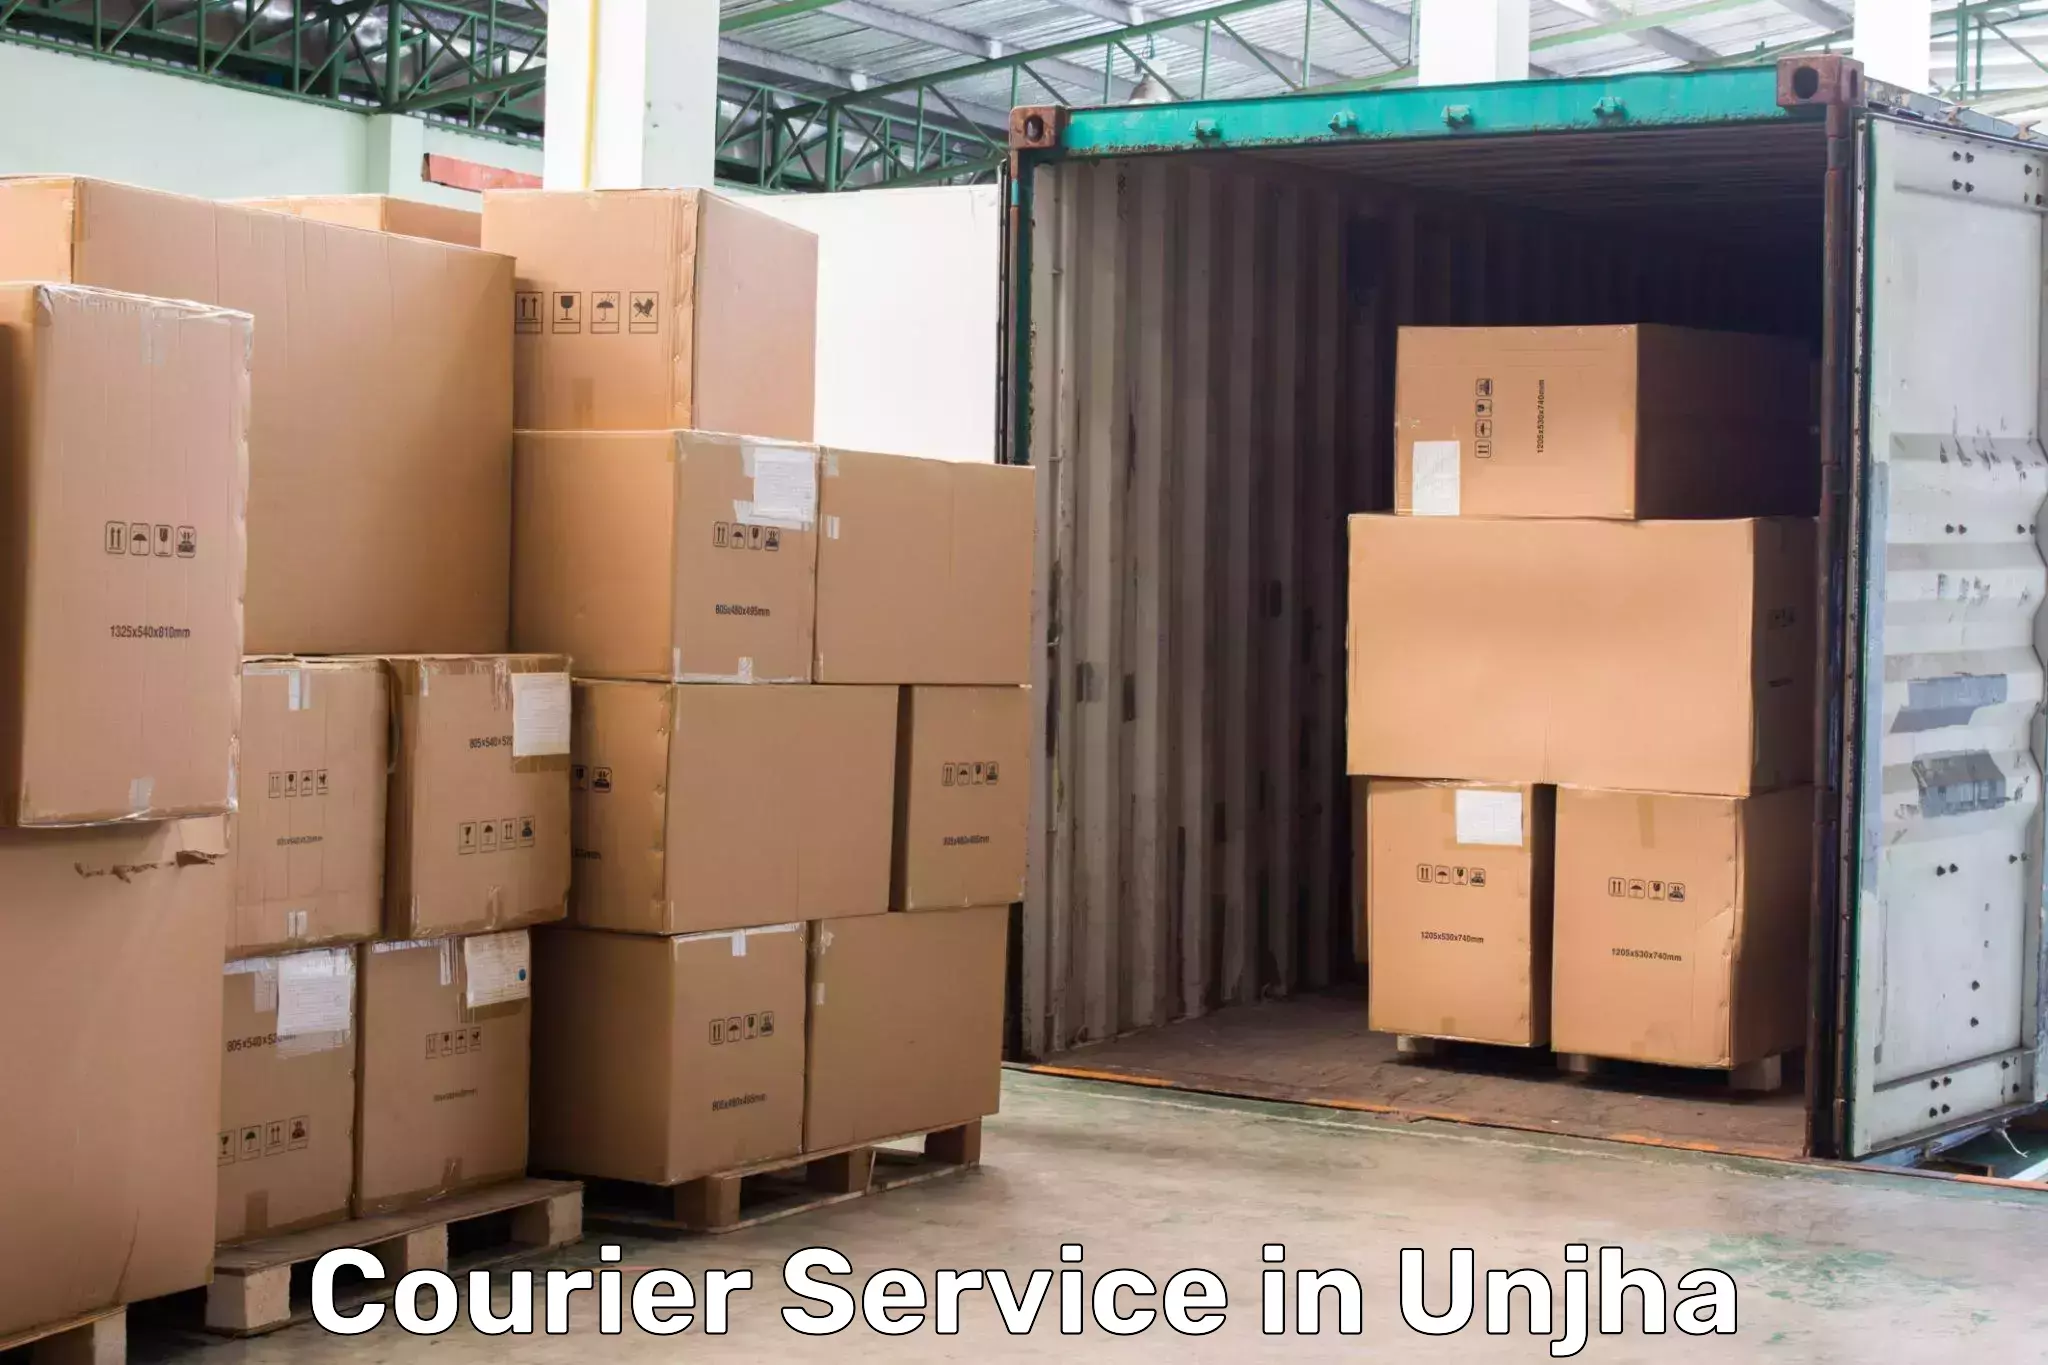 Express logistics in Unjha